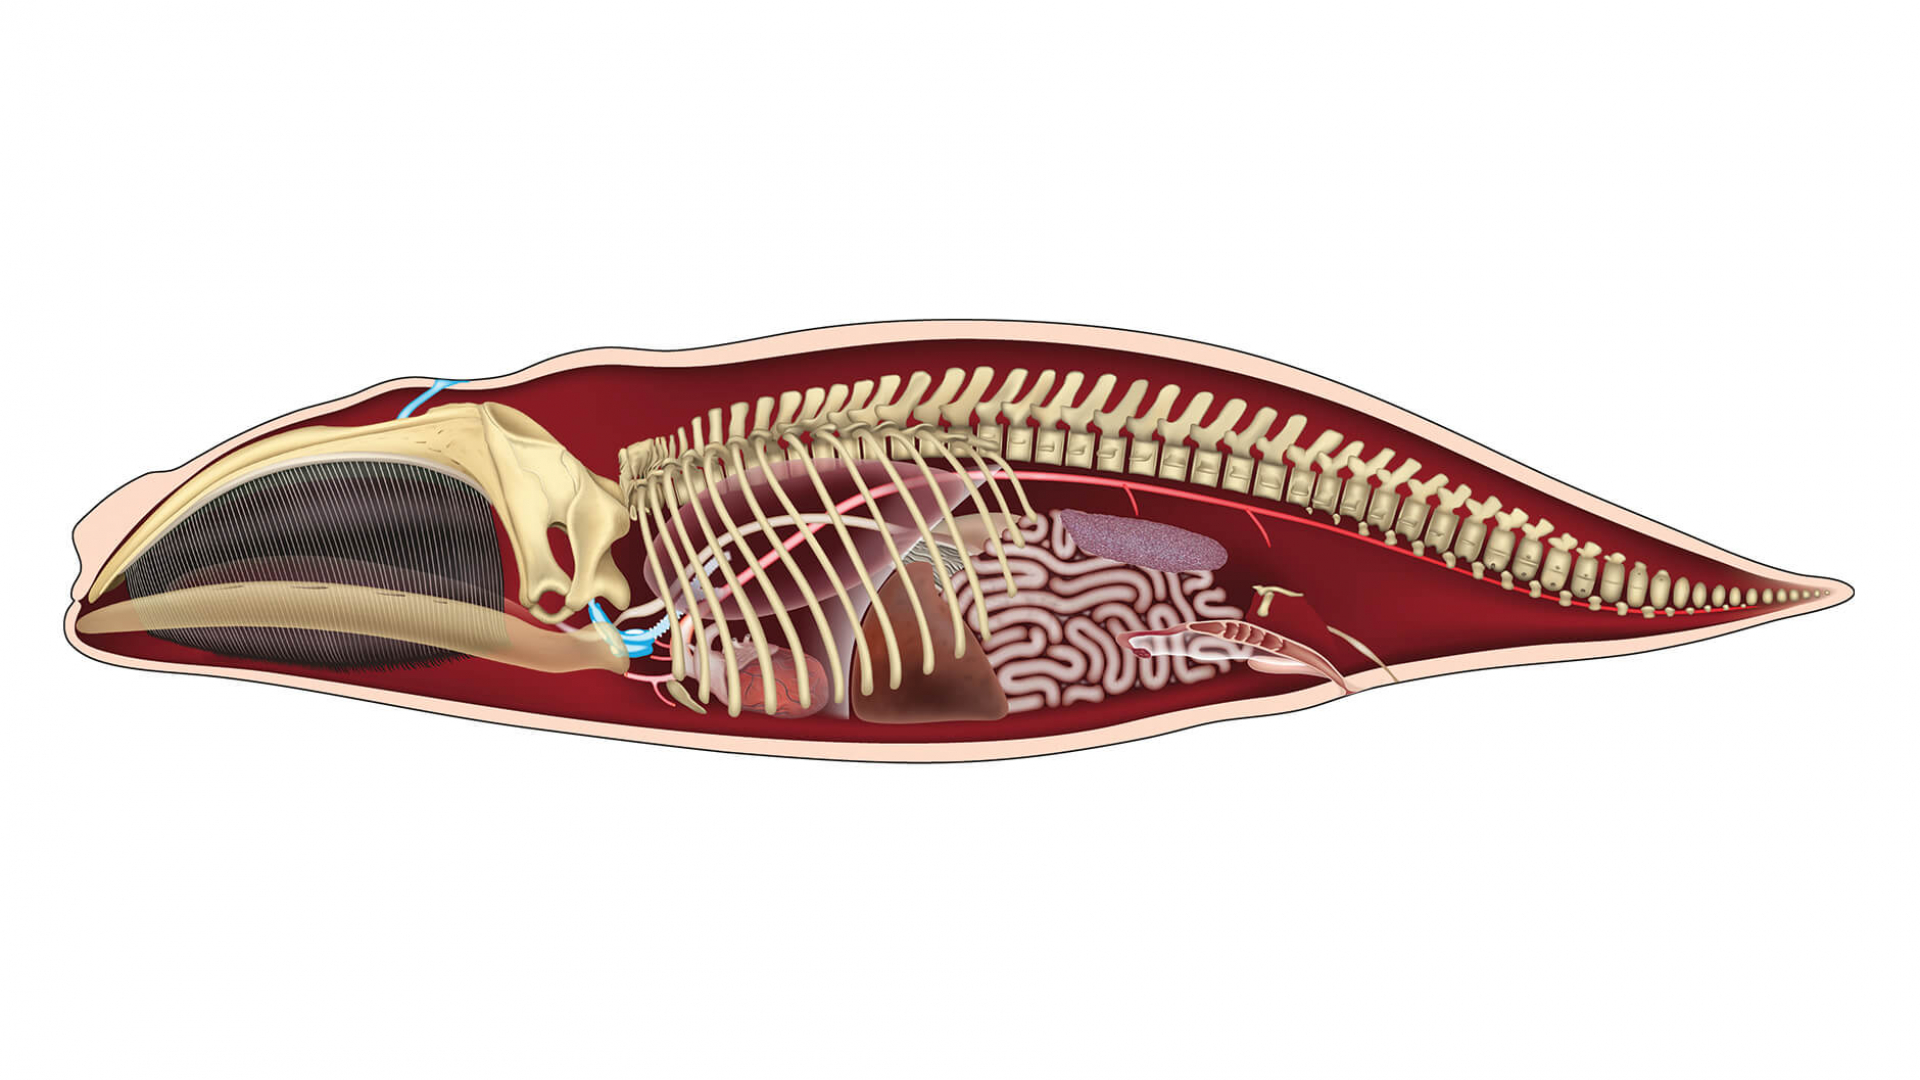 North Atlantic right whale anatomy illustration.